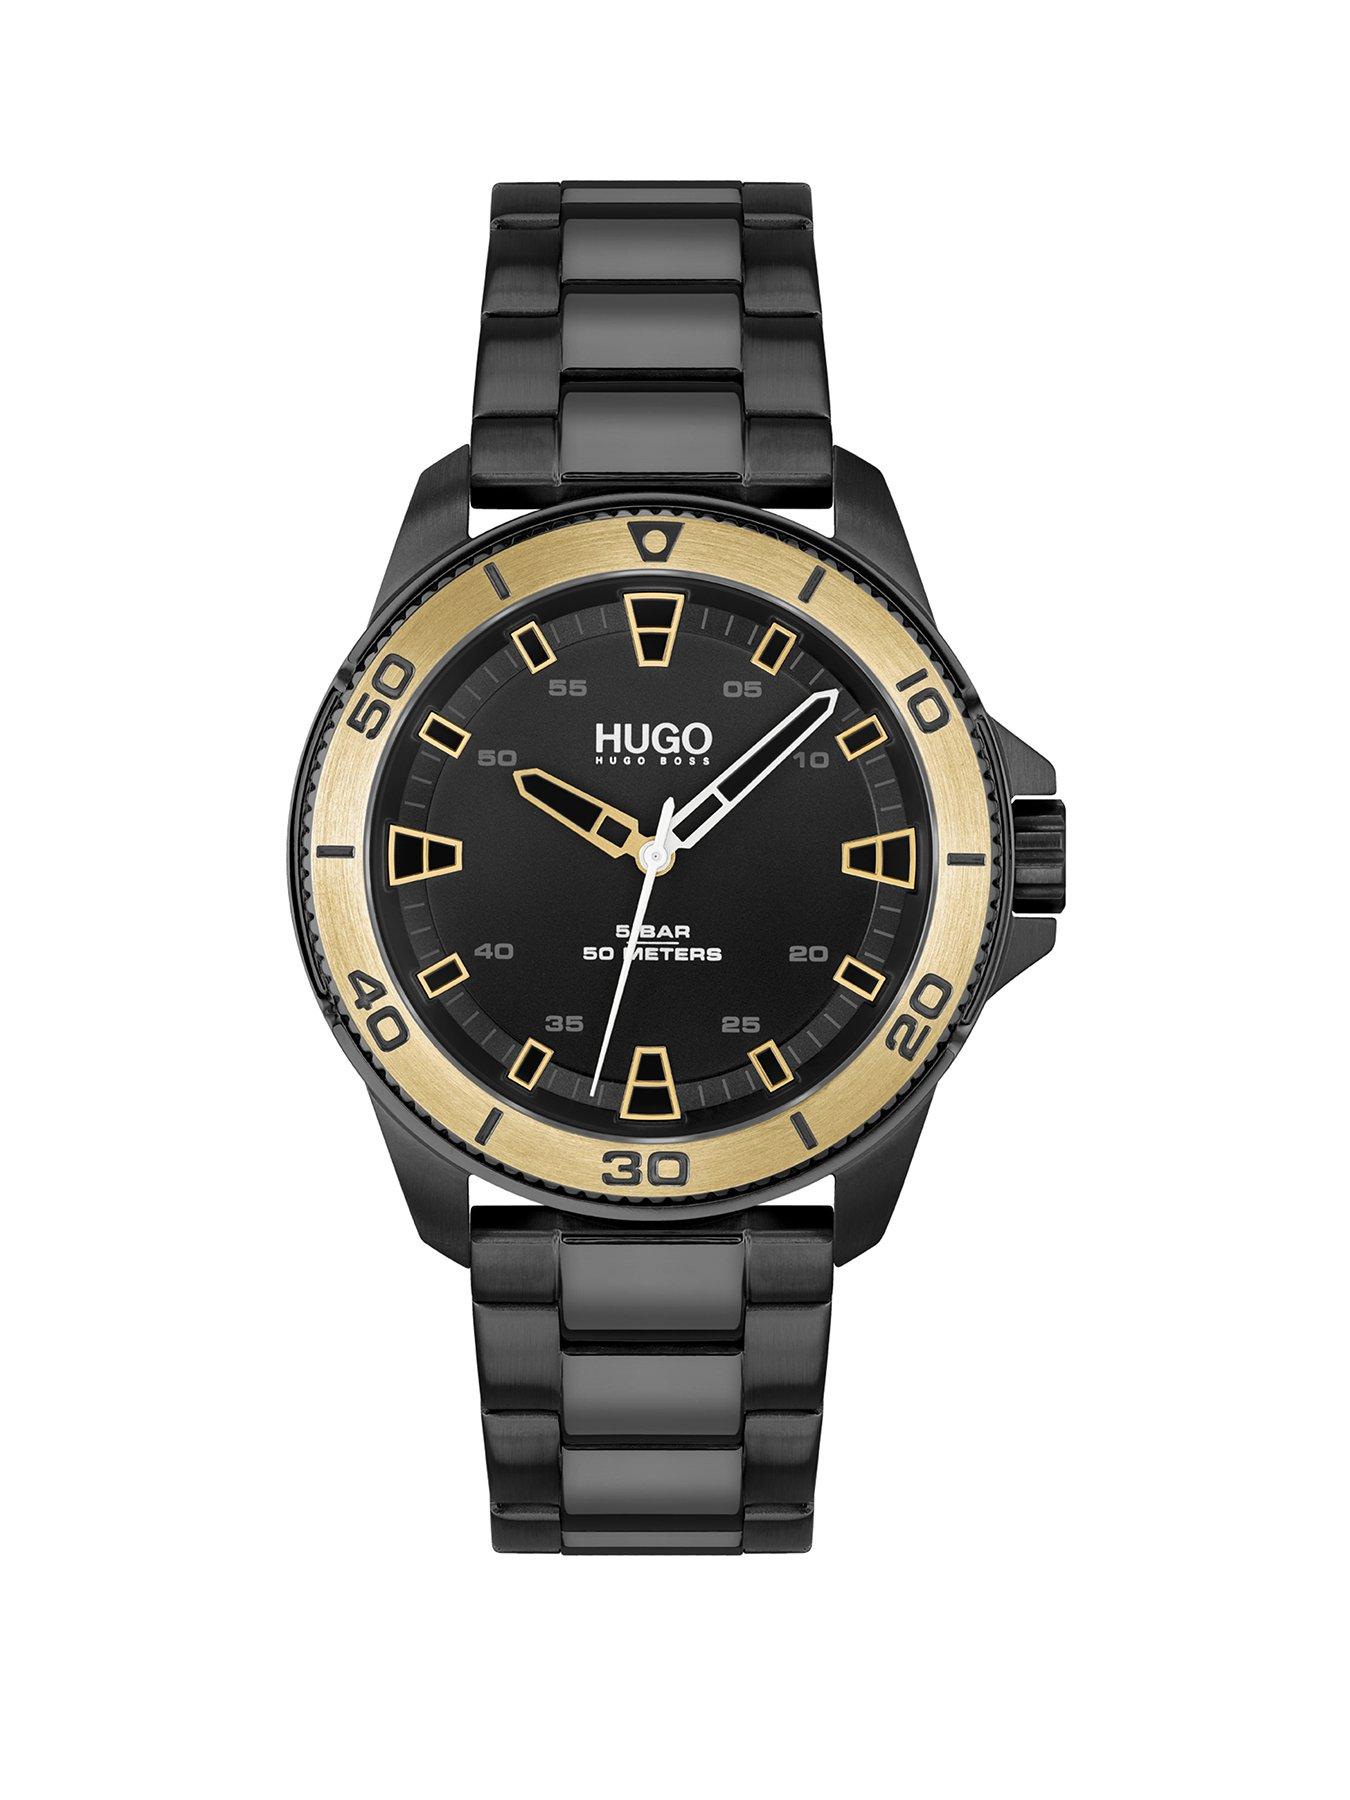  Hugo Black Dial Gold Tone Bezel Bracelet Watch